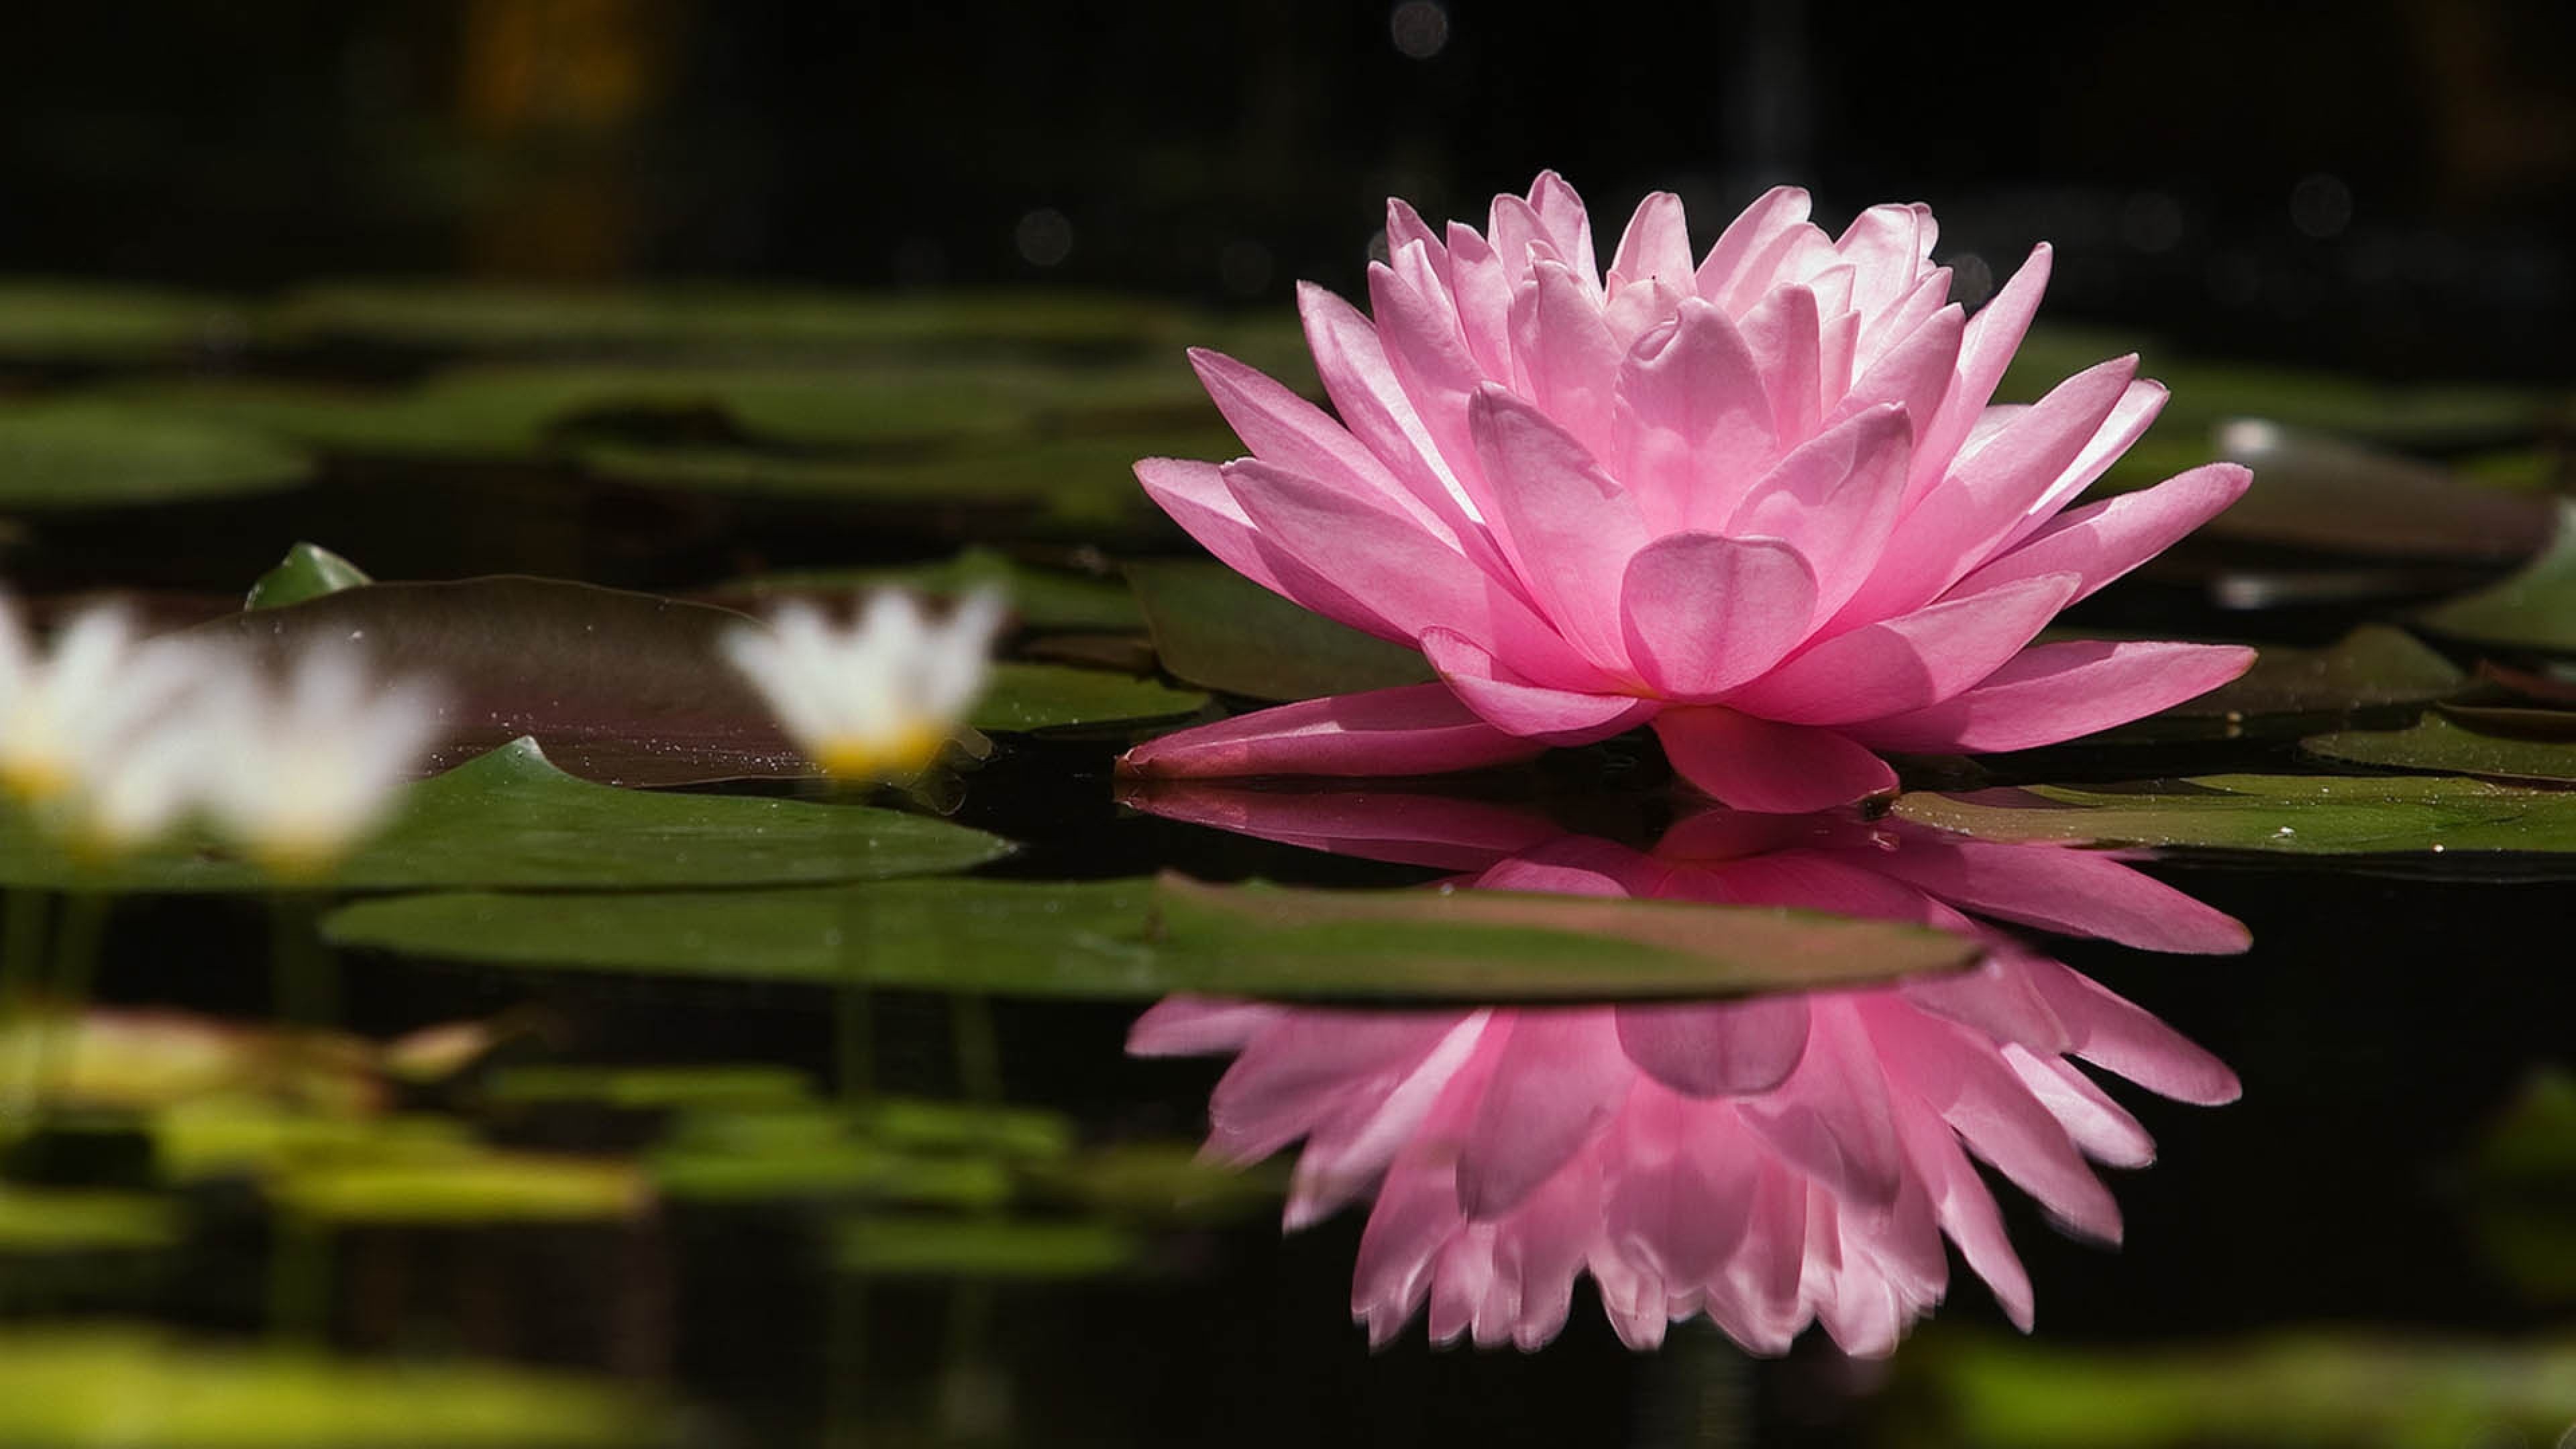 Lotus flower Google search, Pink lily wallpaper, Lily wallpaper, Flower beauty, 3840x2160 4K Desktop